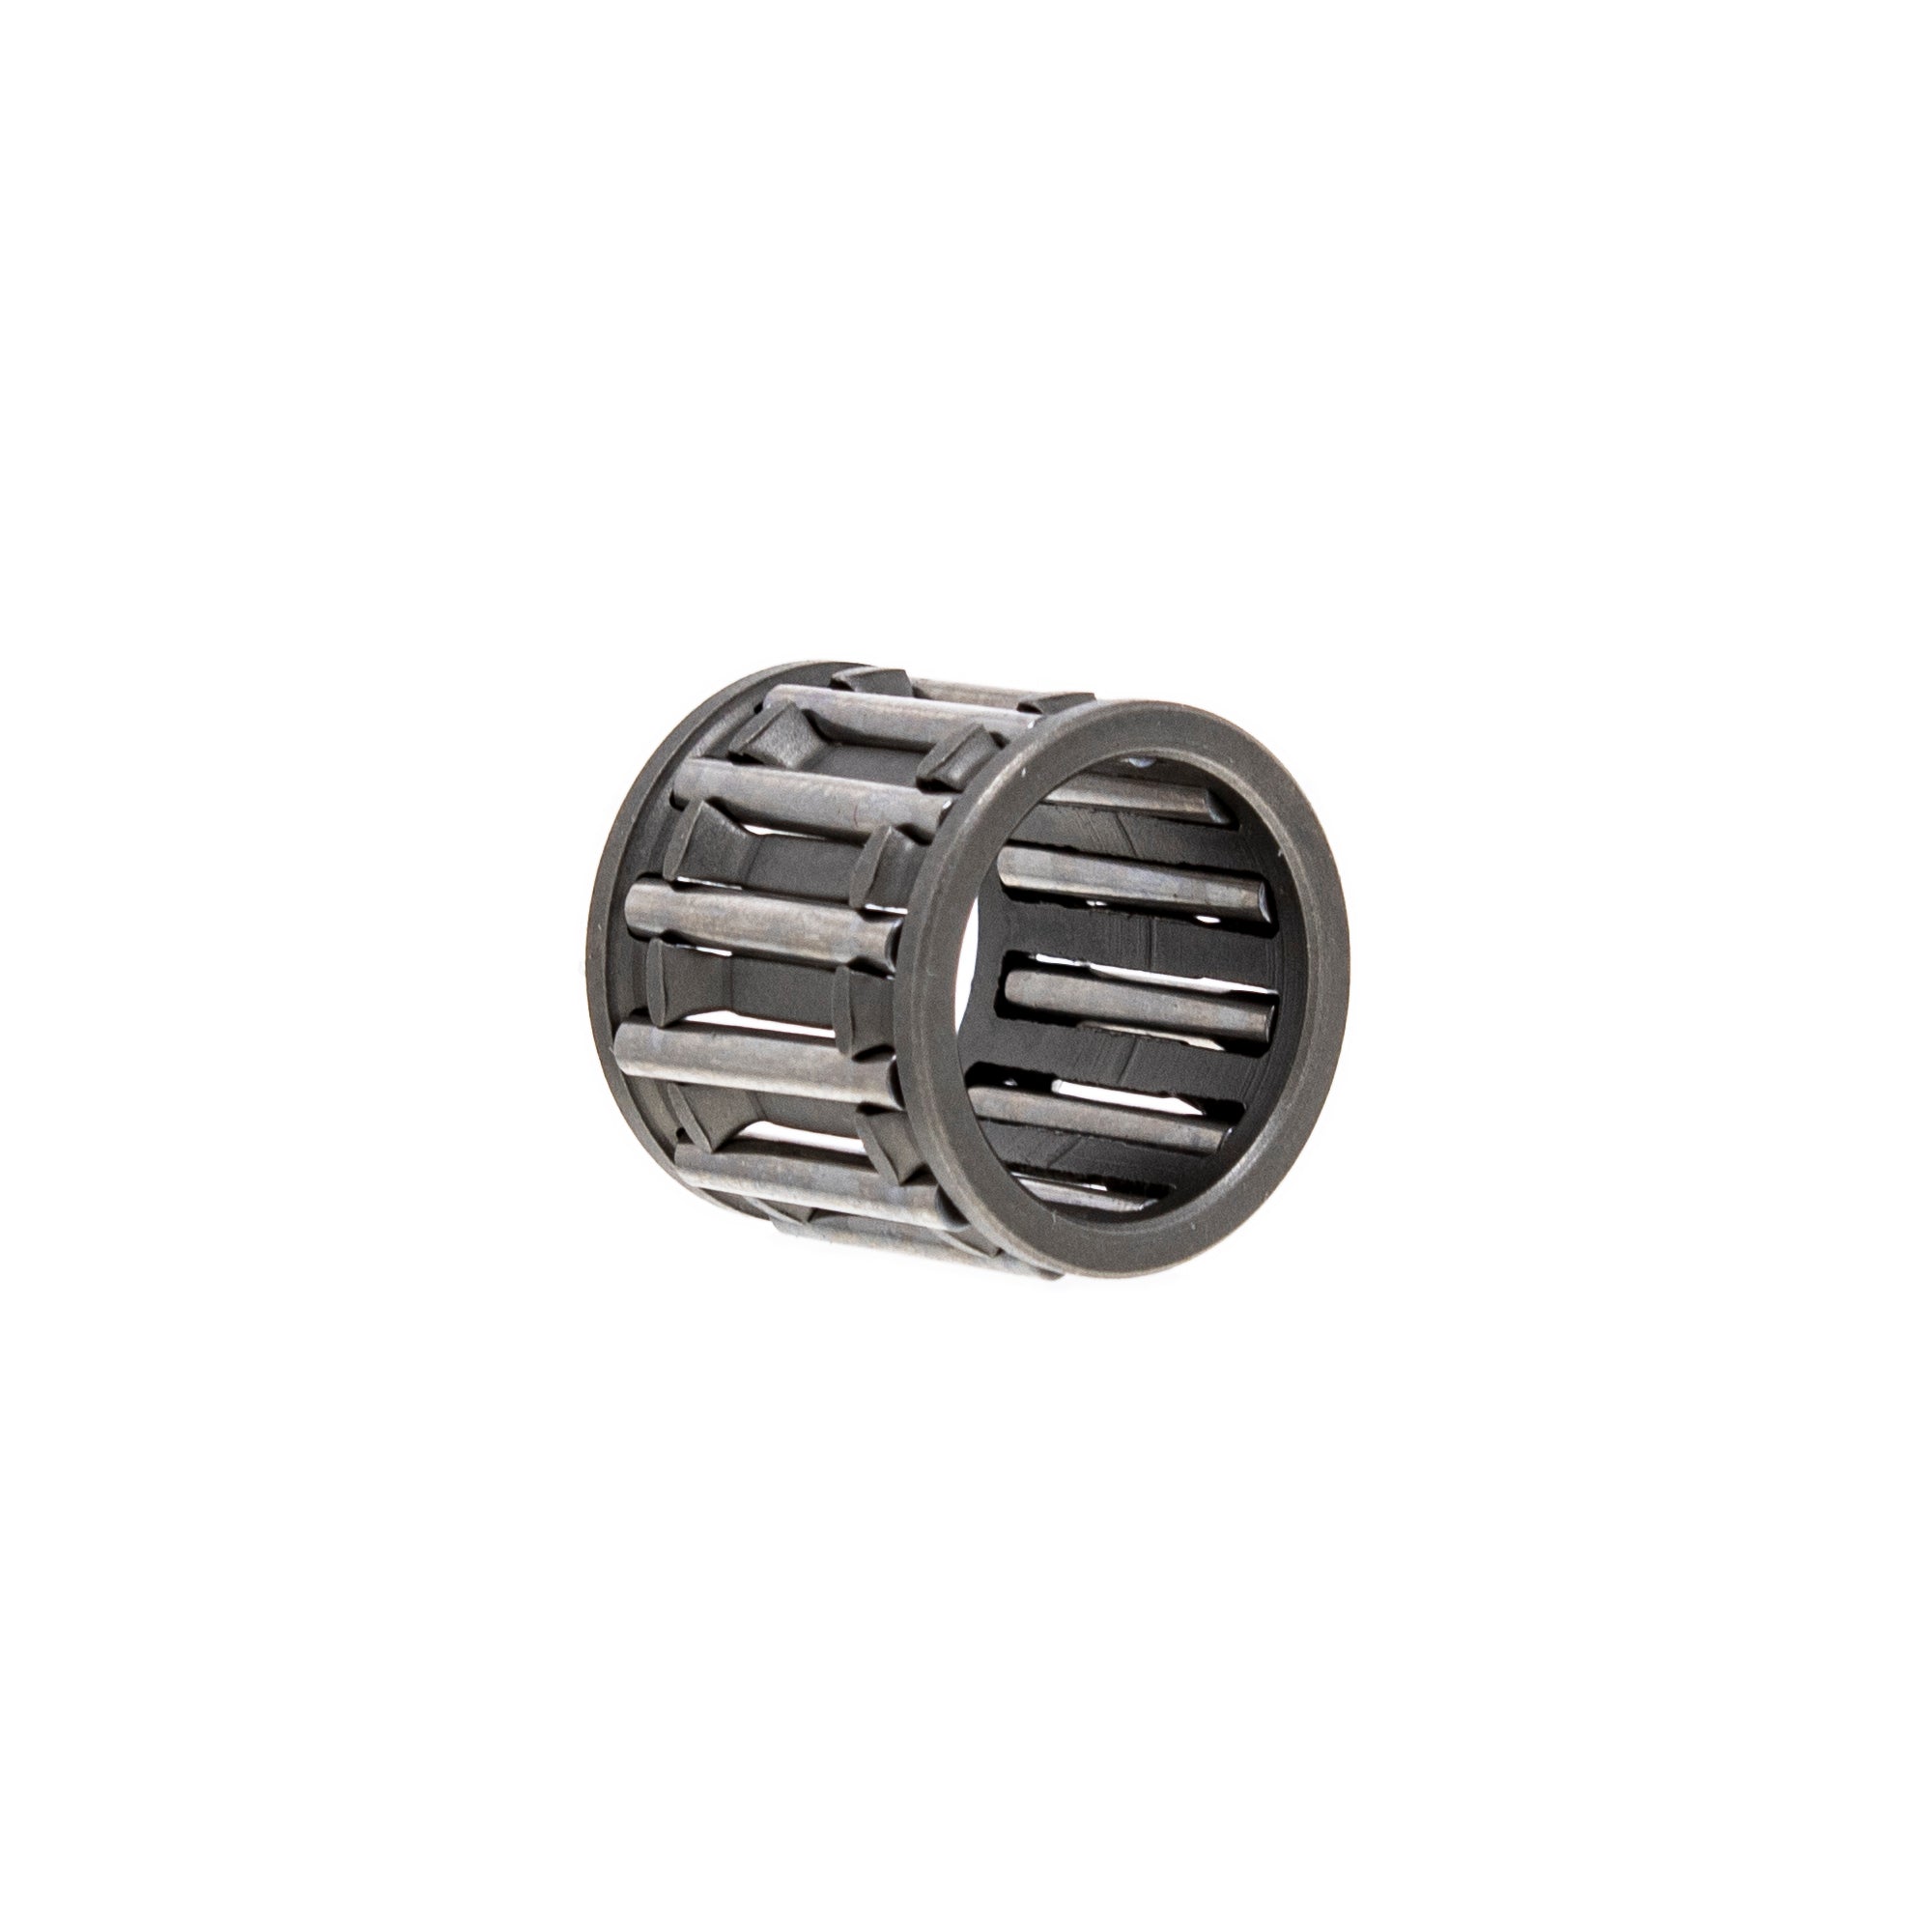 Stock Piston Ring Wristpin Kit for Yamaha YZ85 5PA-11631-00-D0